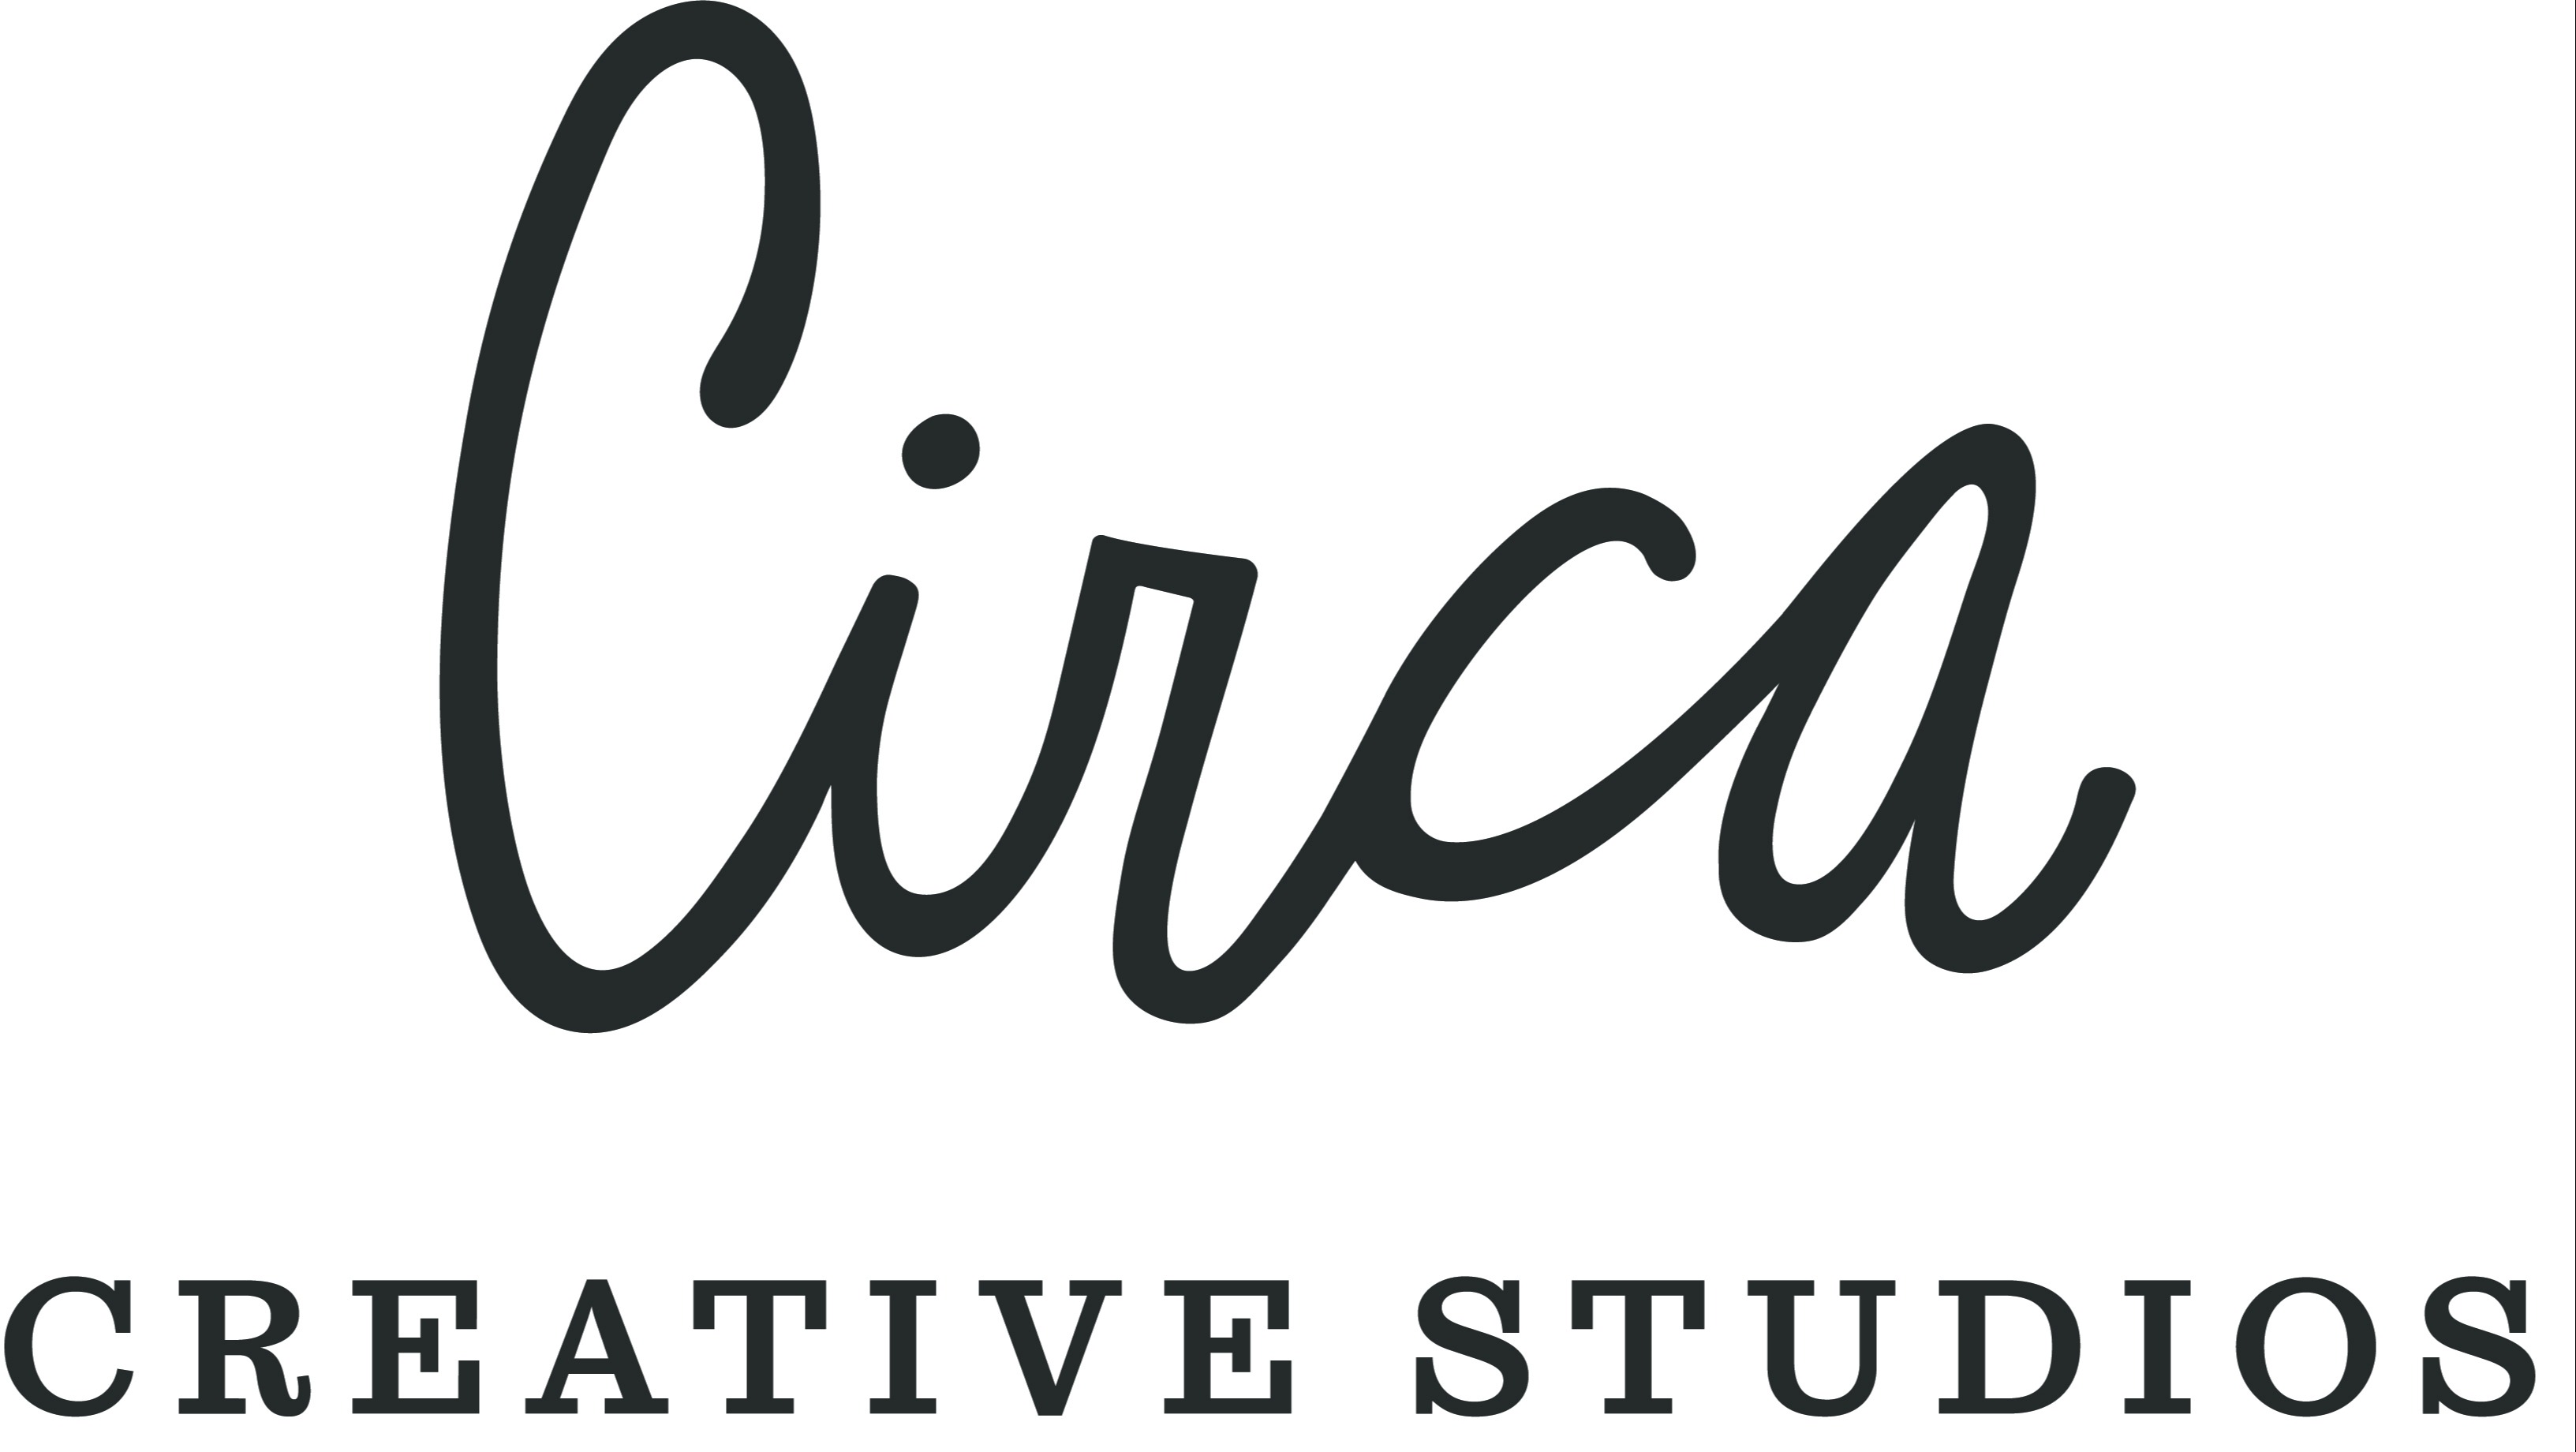 Circa Creative Studios Agency Services & Qualifications | HubSpot